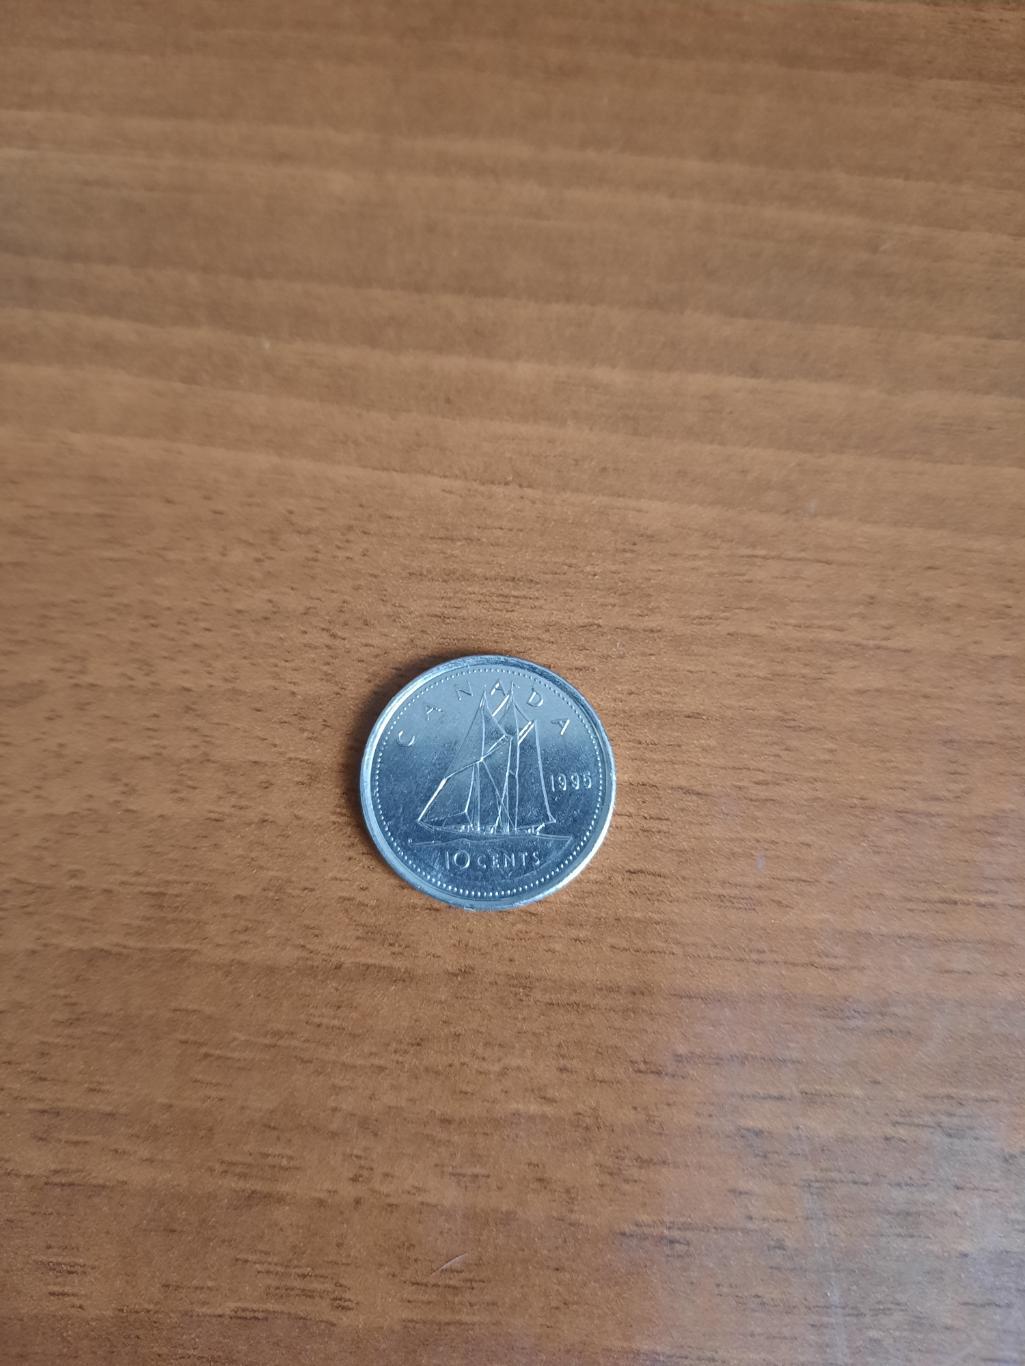 Канада 10 центов 1995